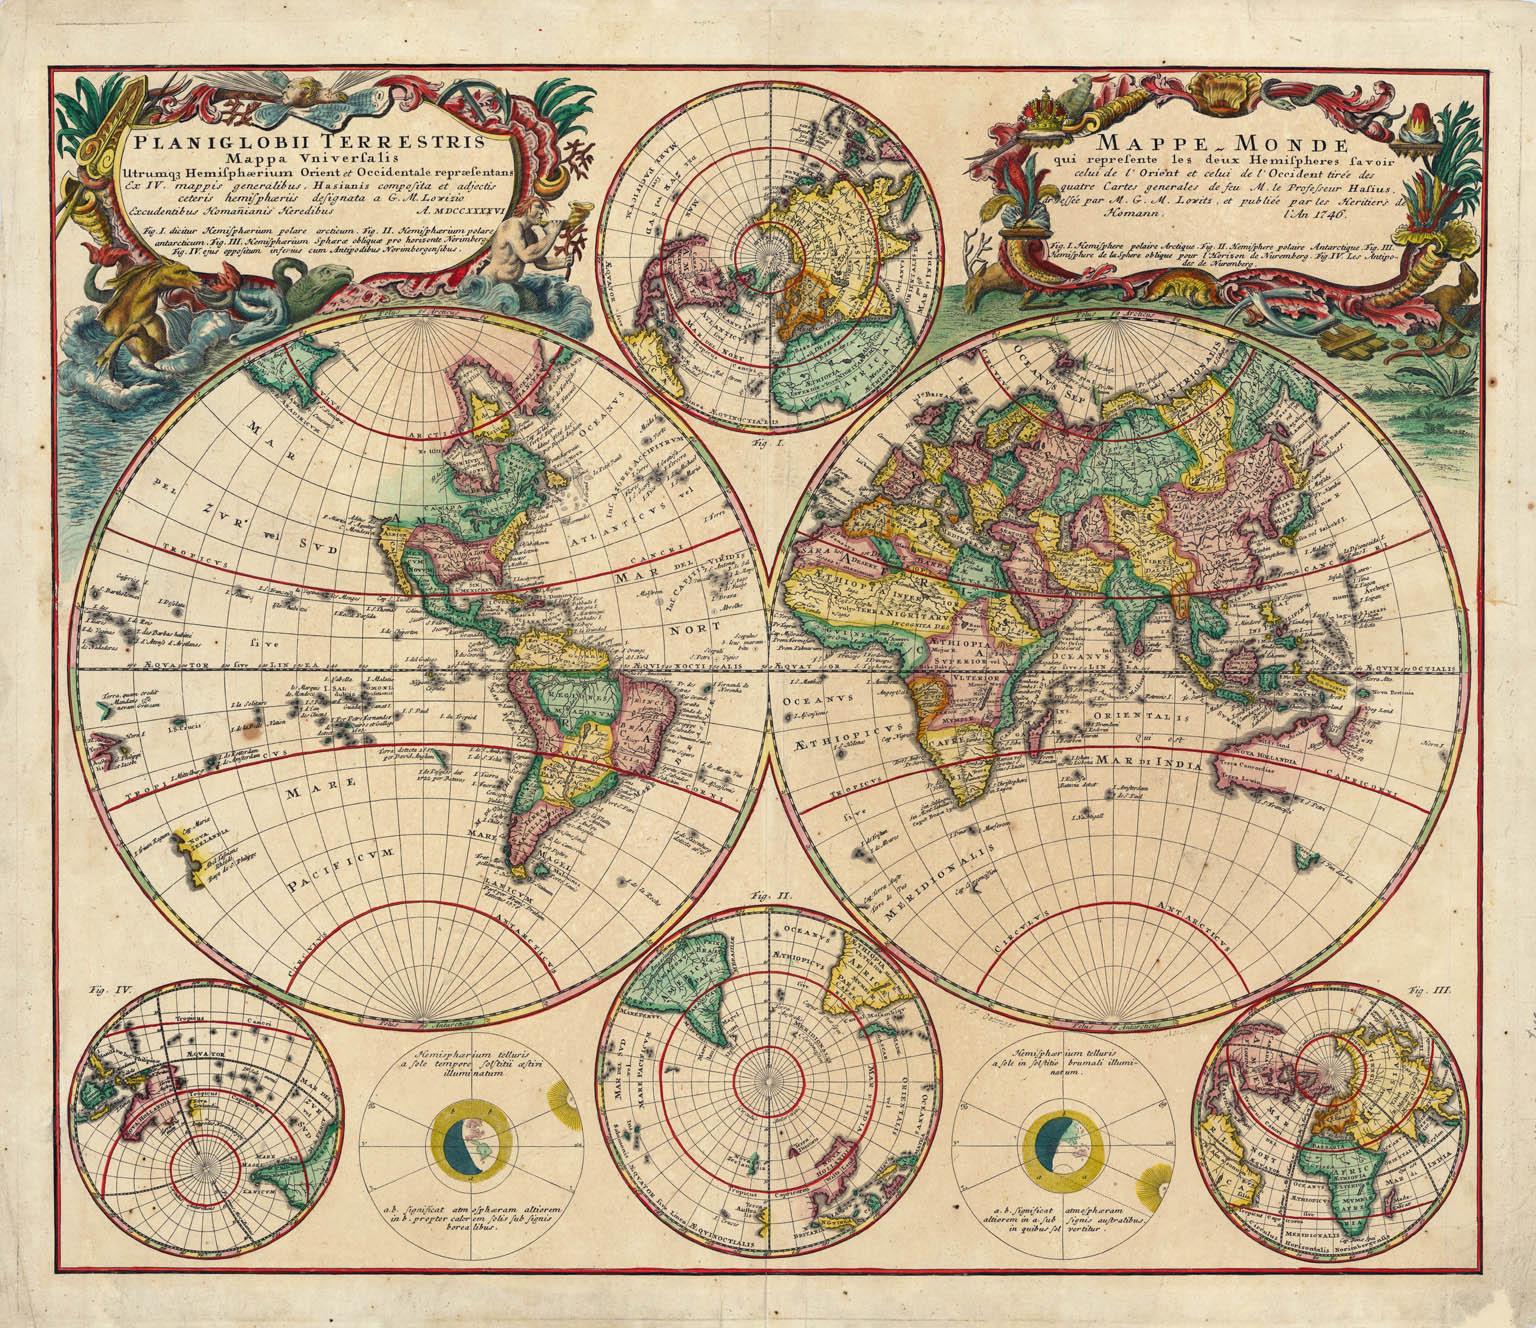 Homann Heirs Print – Planiglobii Terrestris Mappa Universalis / Mappe Monde